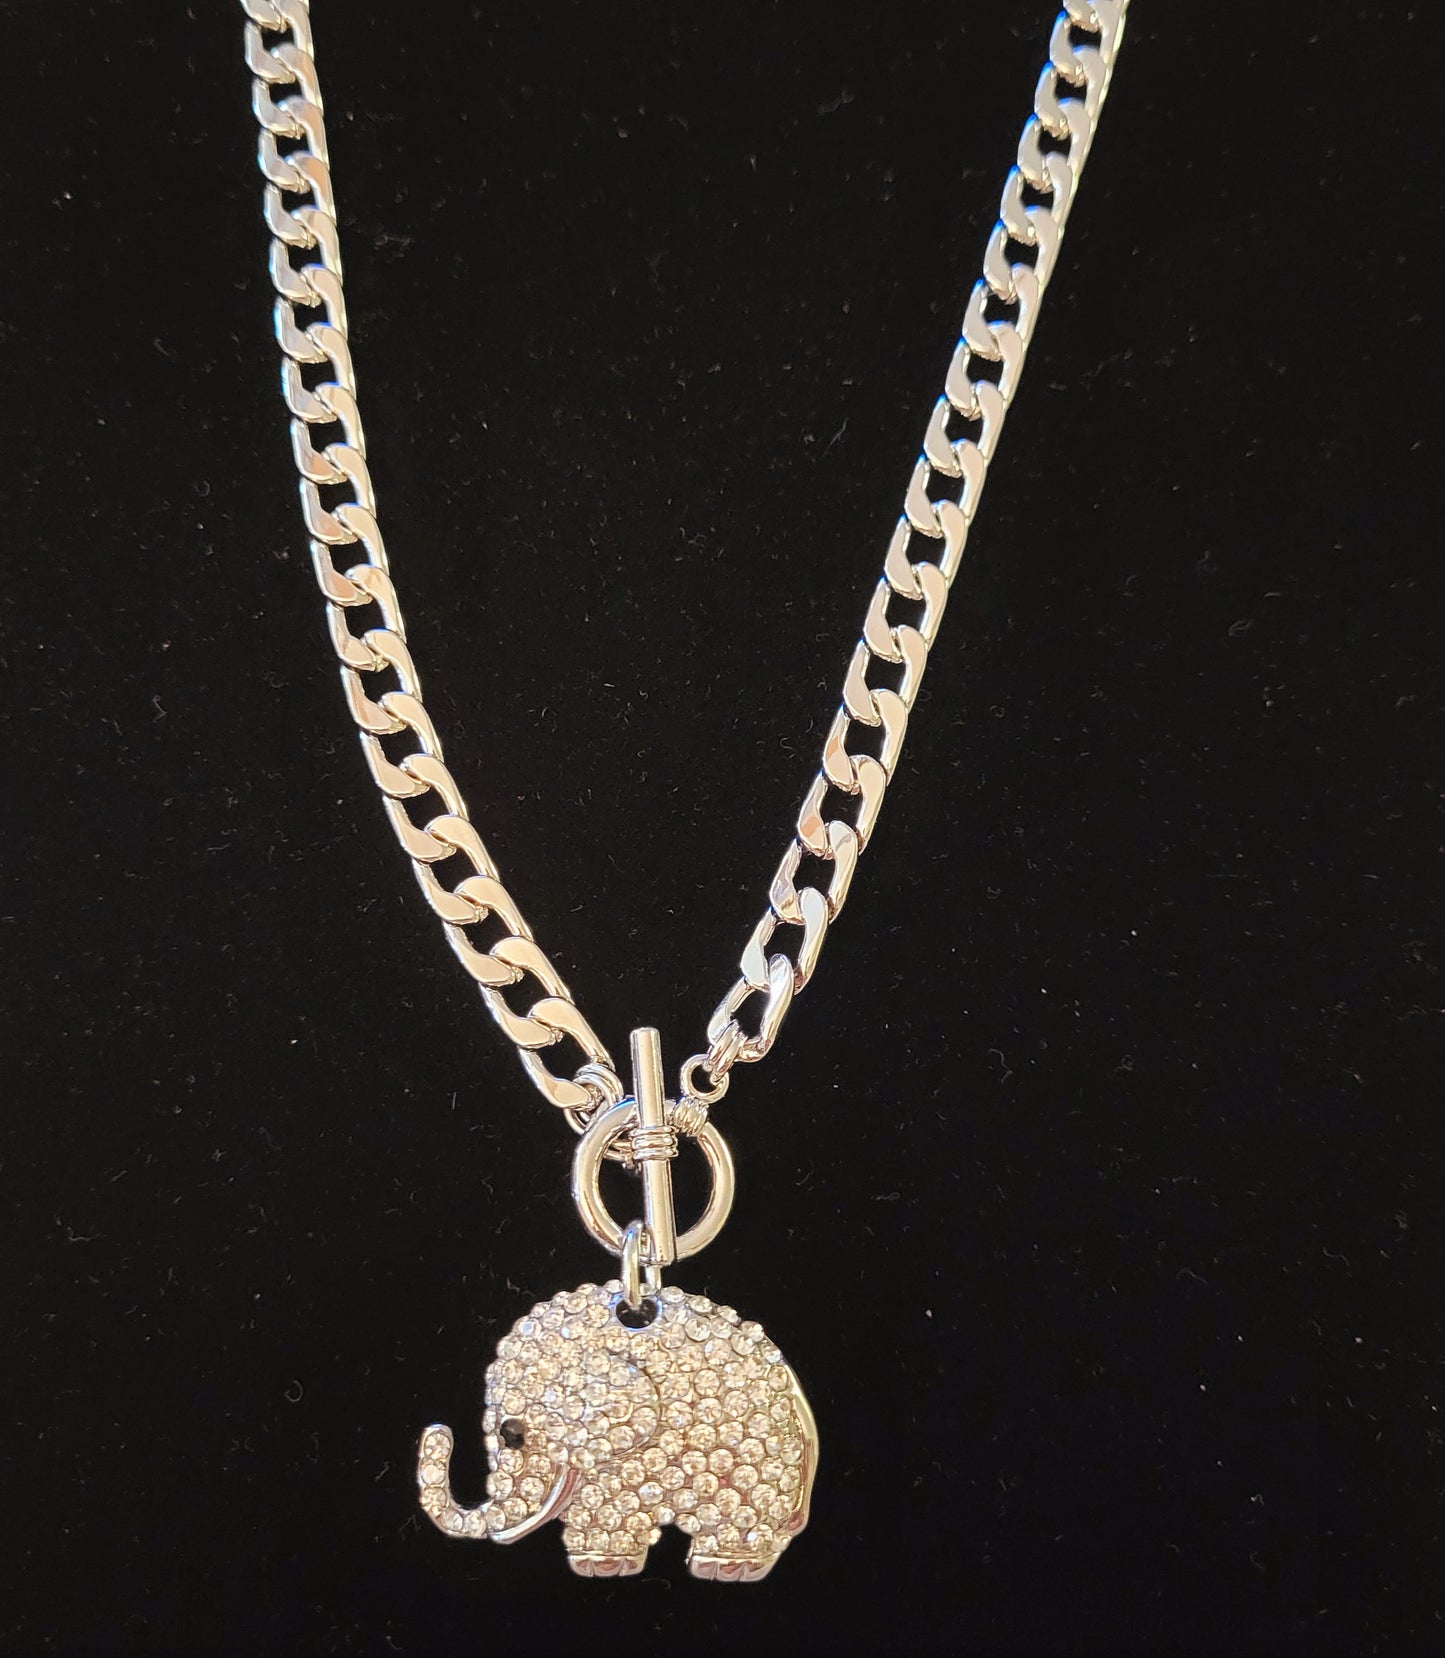 Silvertone bling elephant necklace